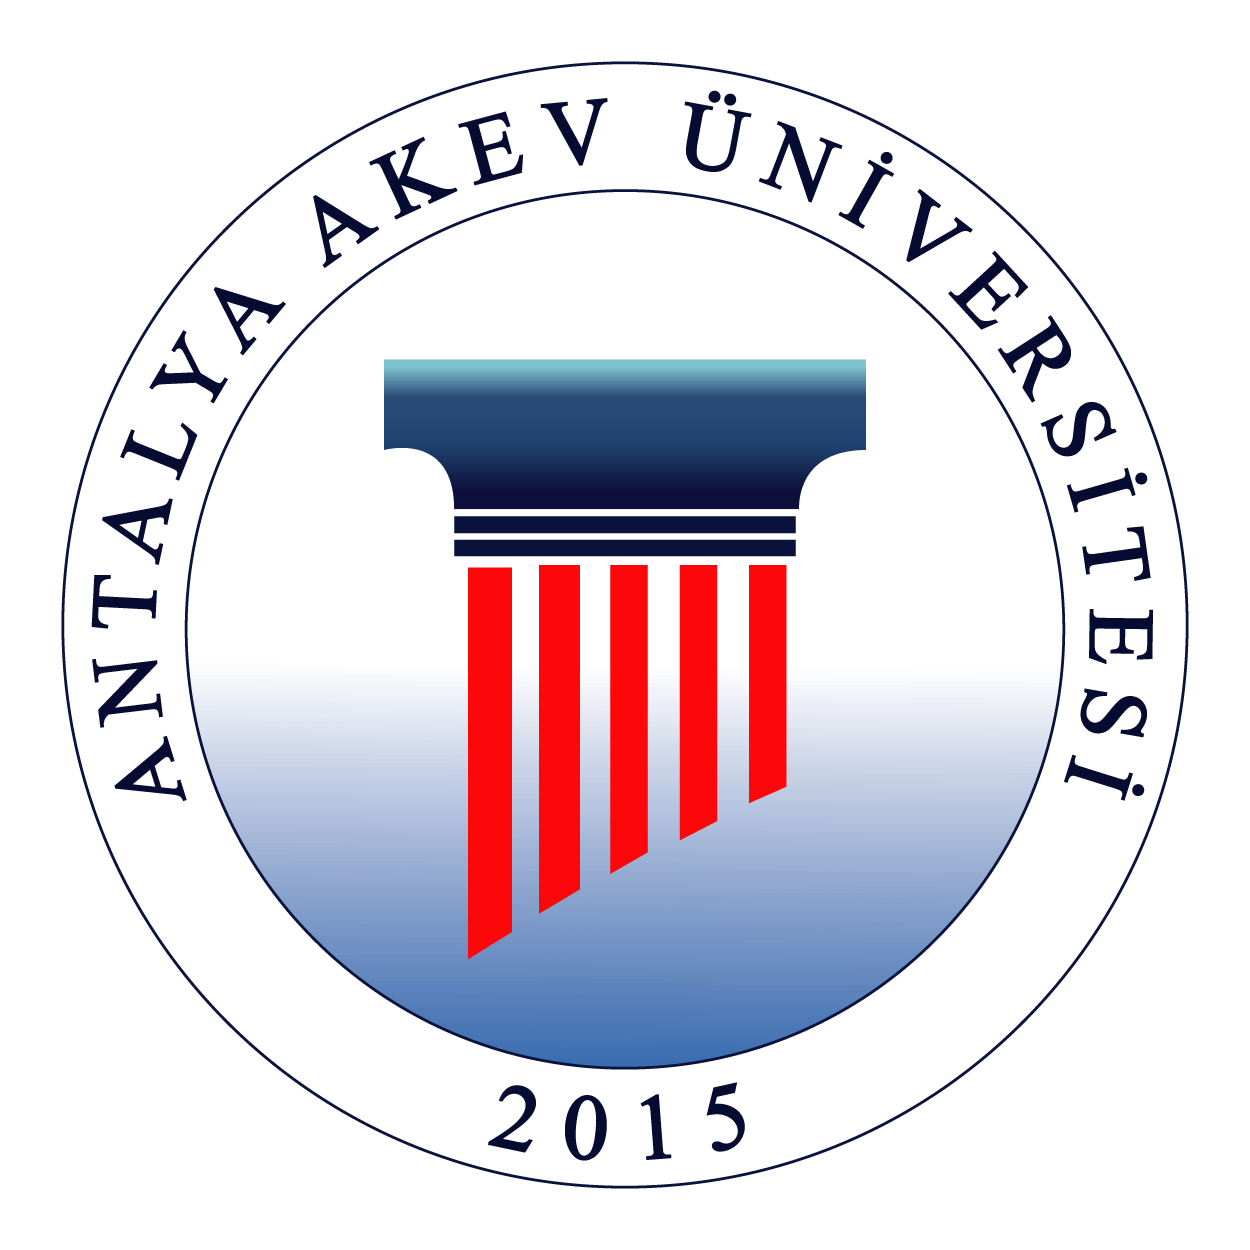 Antalya AKEV Üniversitesi Logo png